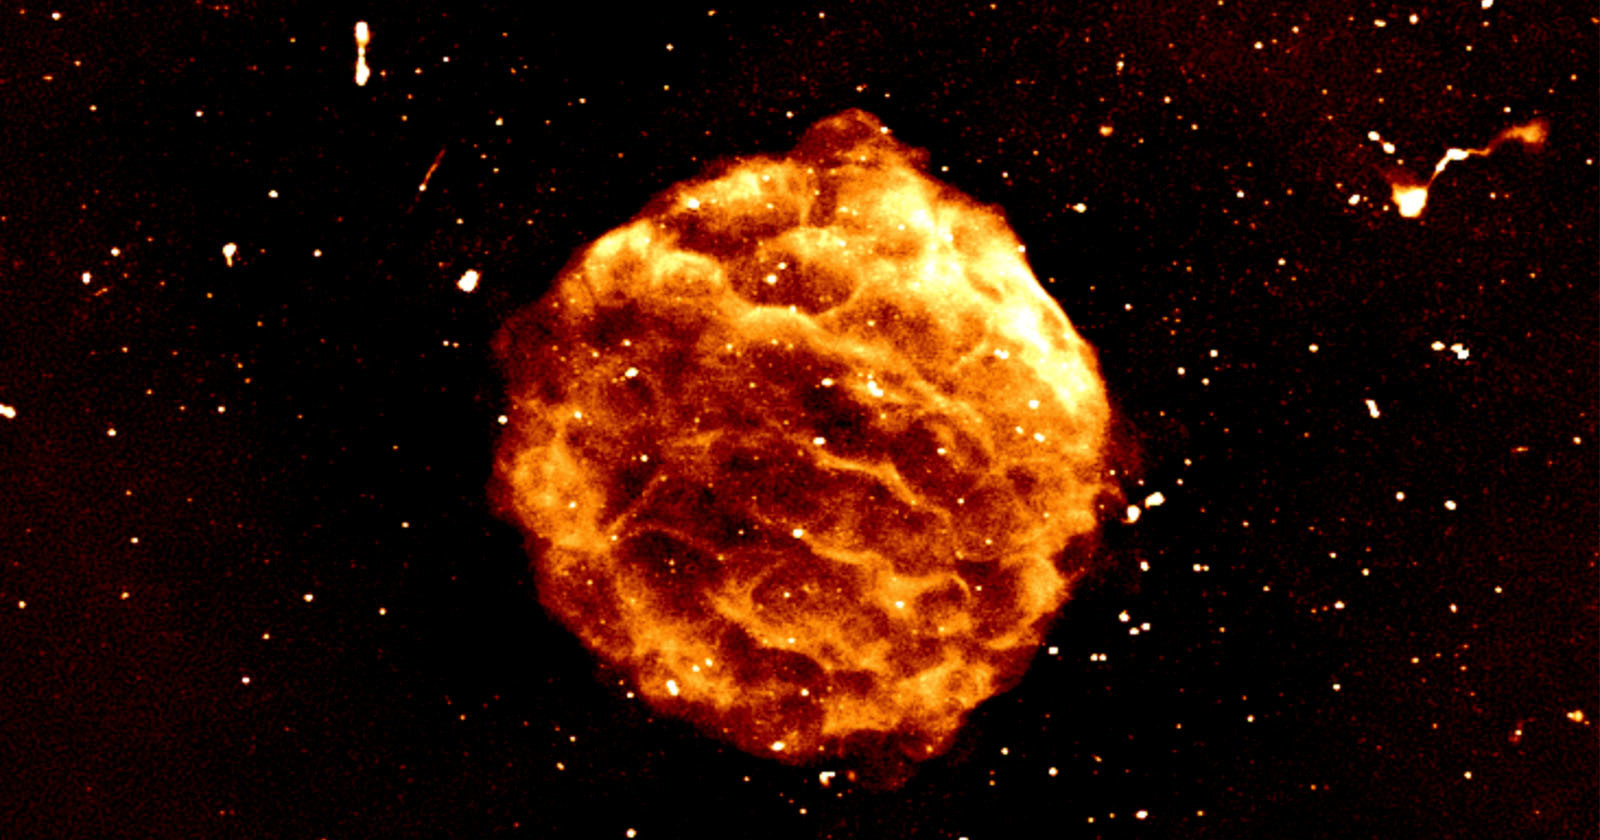  70m supercomputer generates highly detailed image supernova 